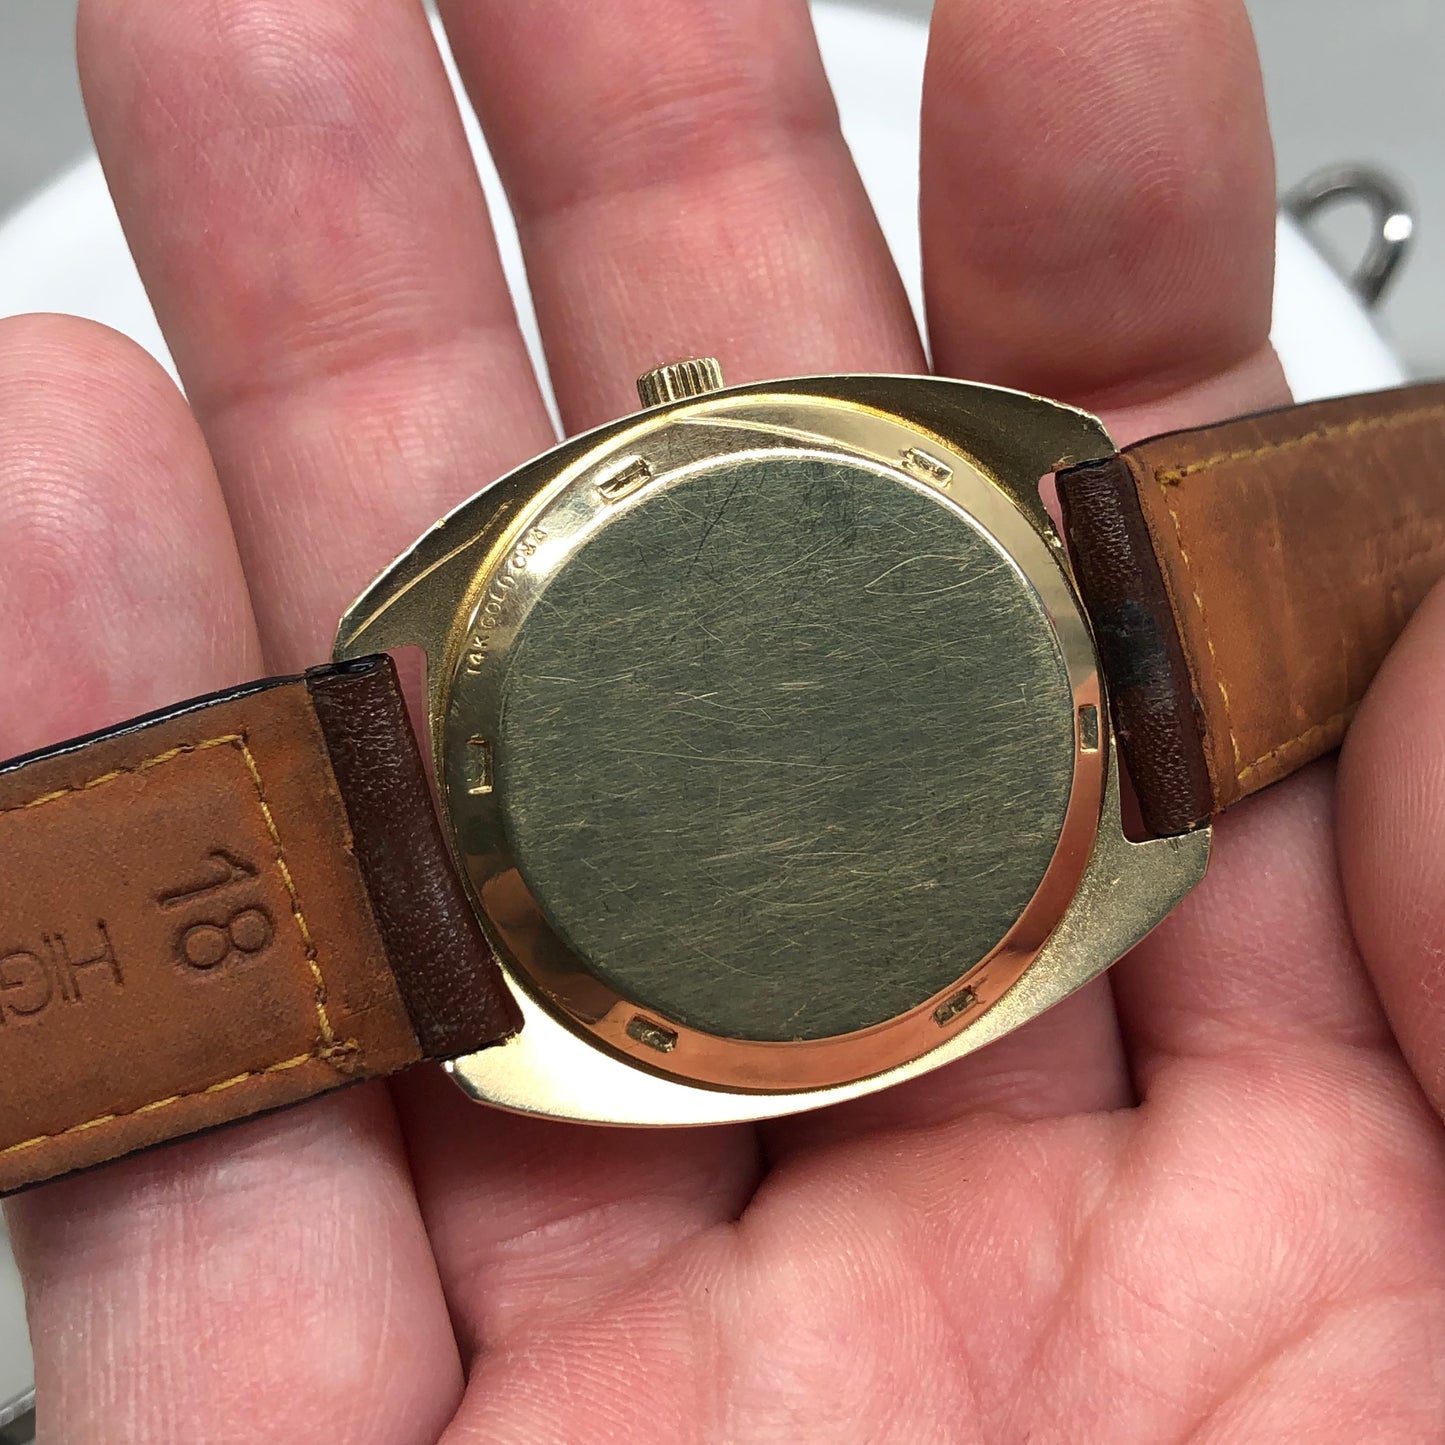 1966 Omega Seamaster 6736 14K Yellow Gold Caliber 563 Date Automatic Wristwatch - Hashtag Watch Company